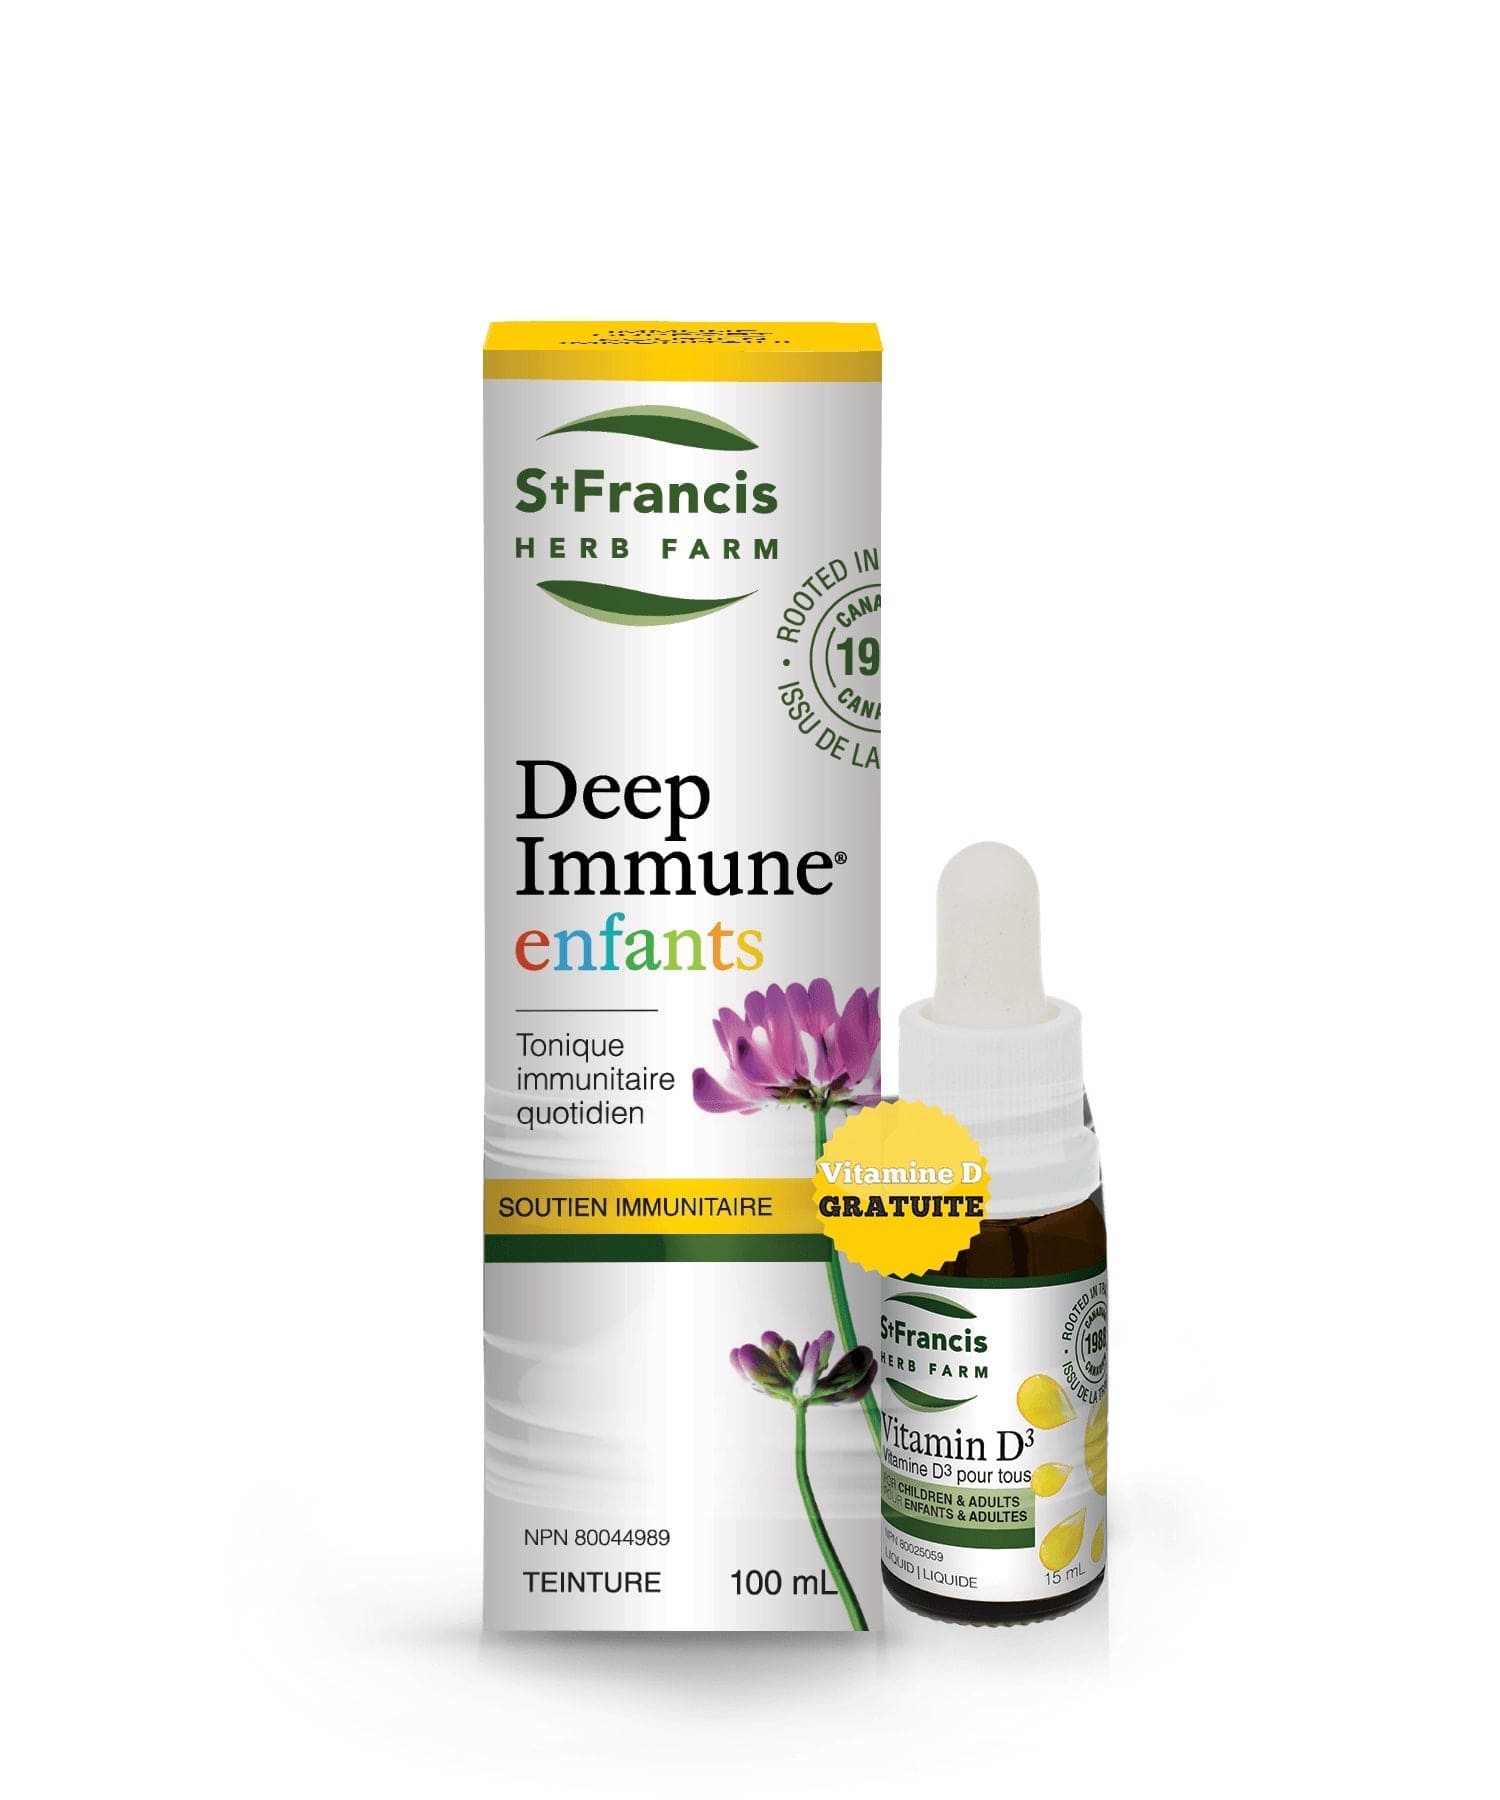 ST-FRANCIS HERB FARM Suppléments Duo Deep immune original (enfants) + vitamine D accolée  100ml+15ml